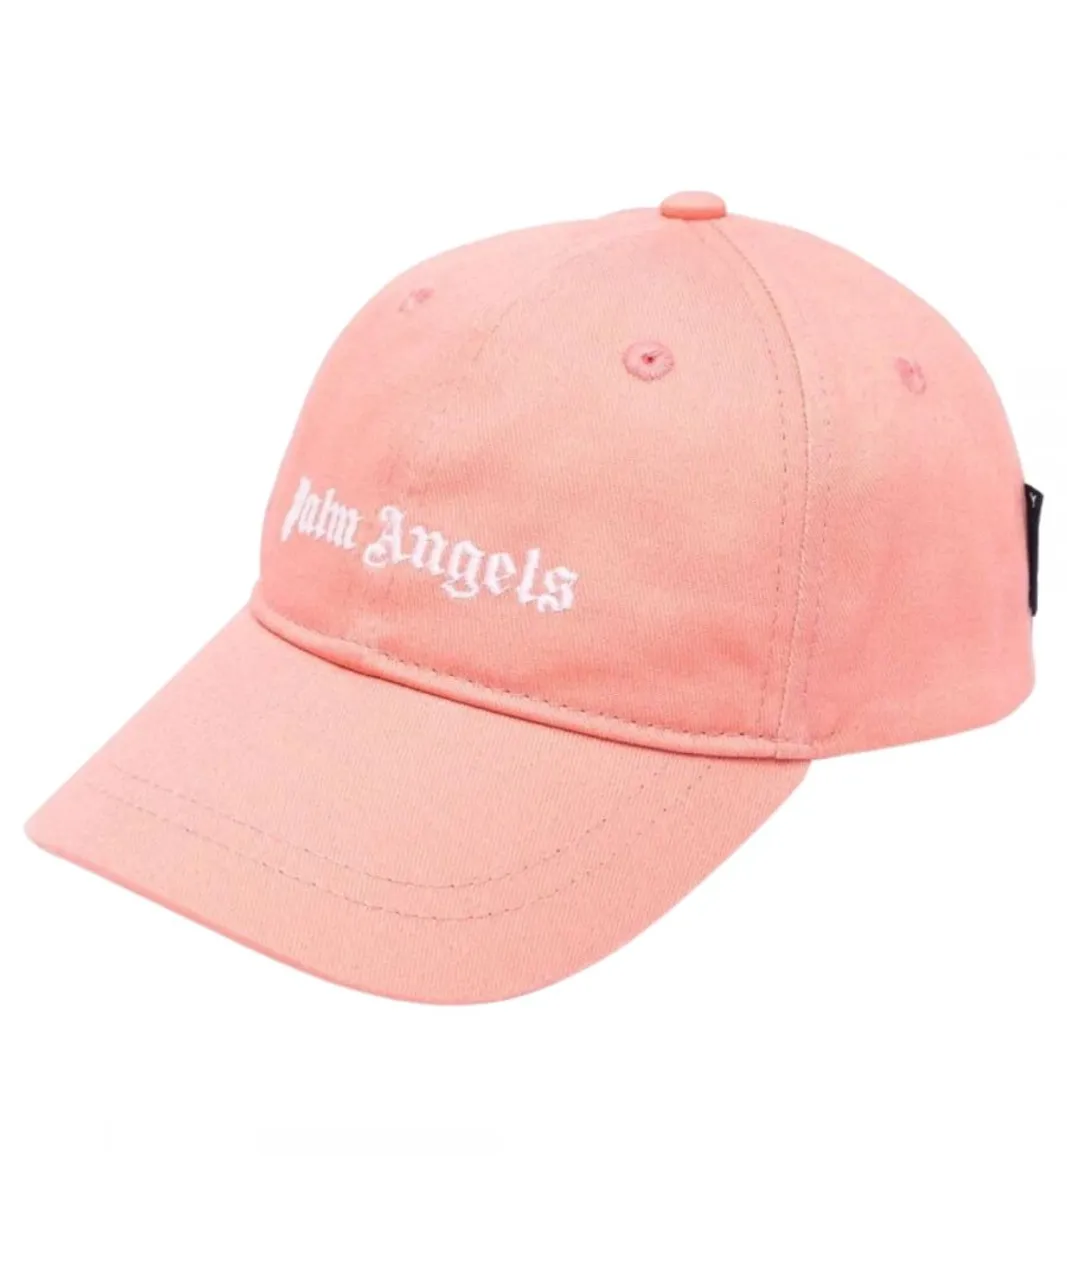 Palm Angels Womens Logo Pink Cap - One